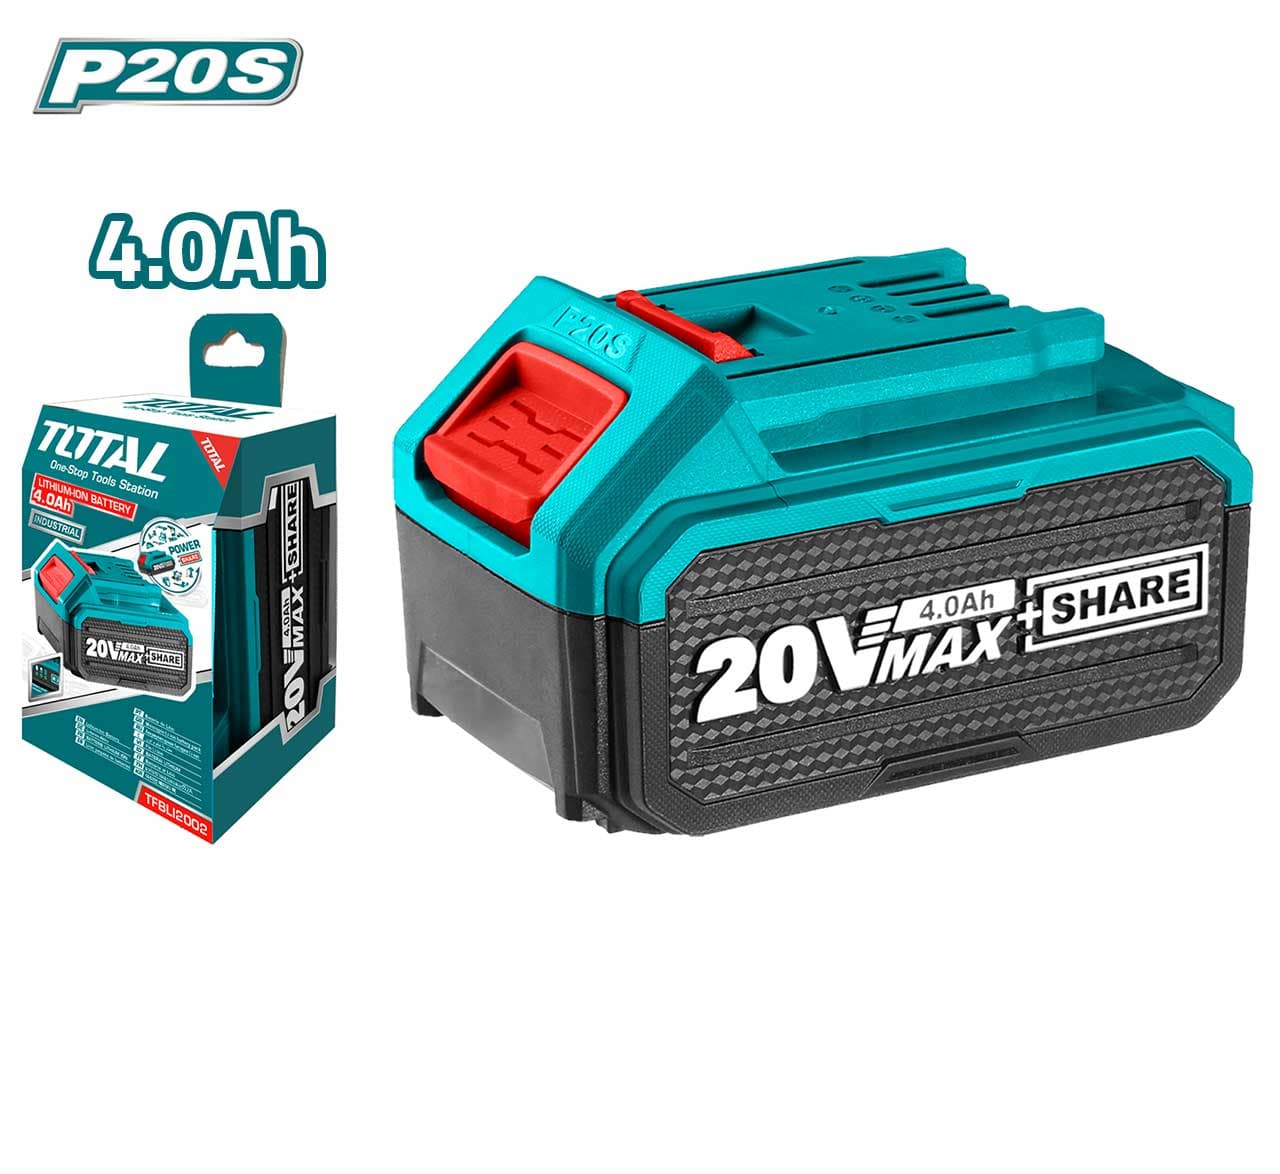 Total Li-ion 20V / 4Ah Battery Pack - TFBLI2002 | Supply Master | Accra, Ghana Tools Buy Tools hardware Building materials